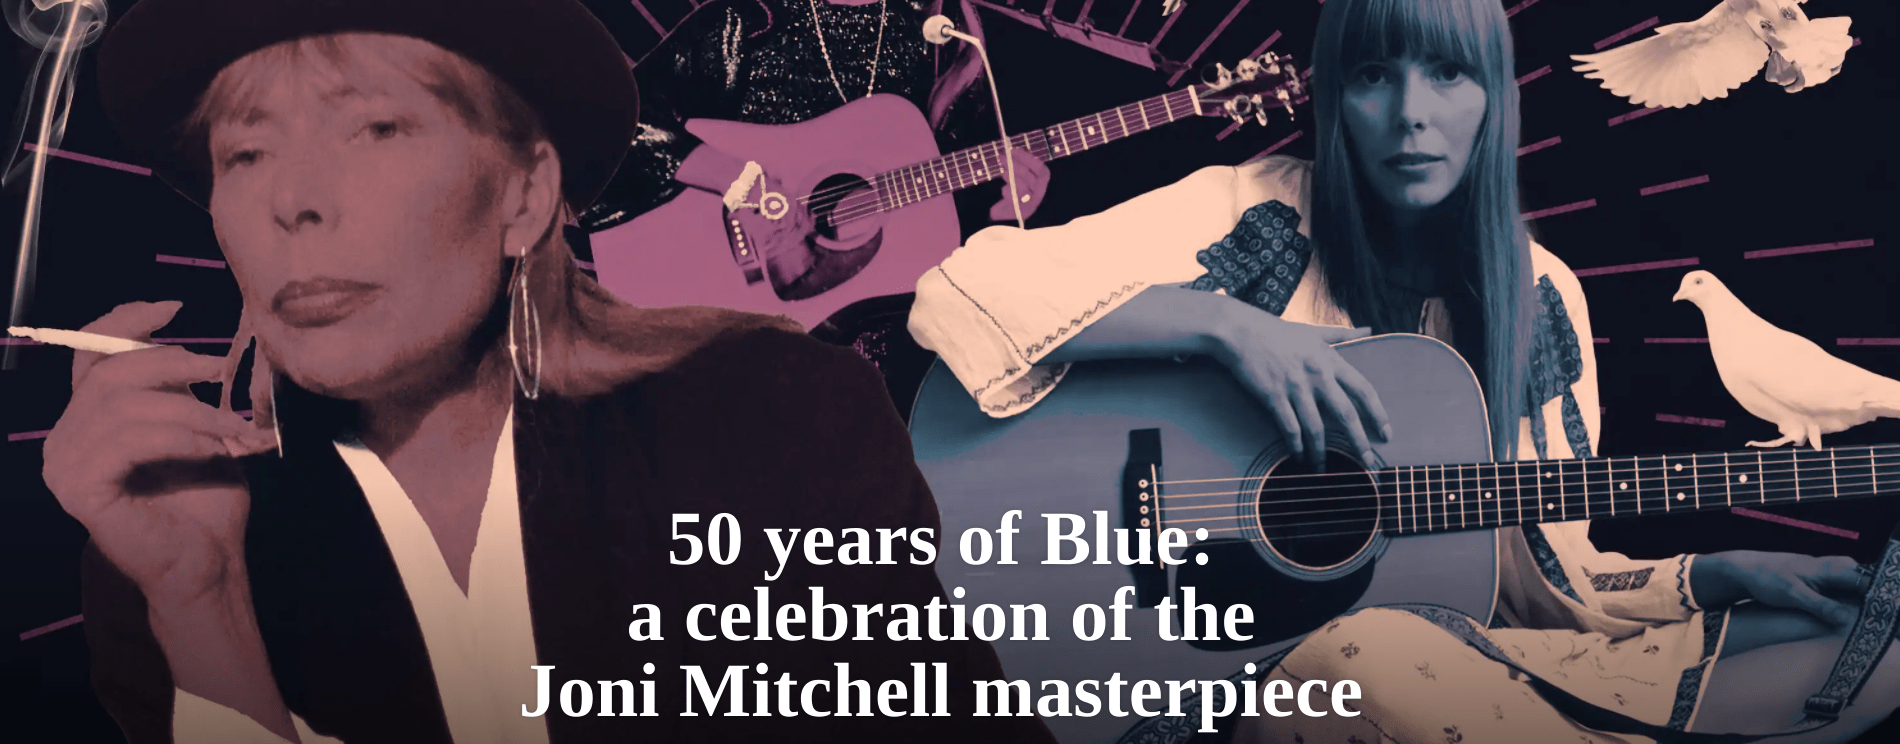 50 years of Blue: A celebration of the Joni Mitchell masterpiece